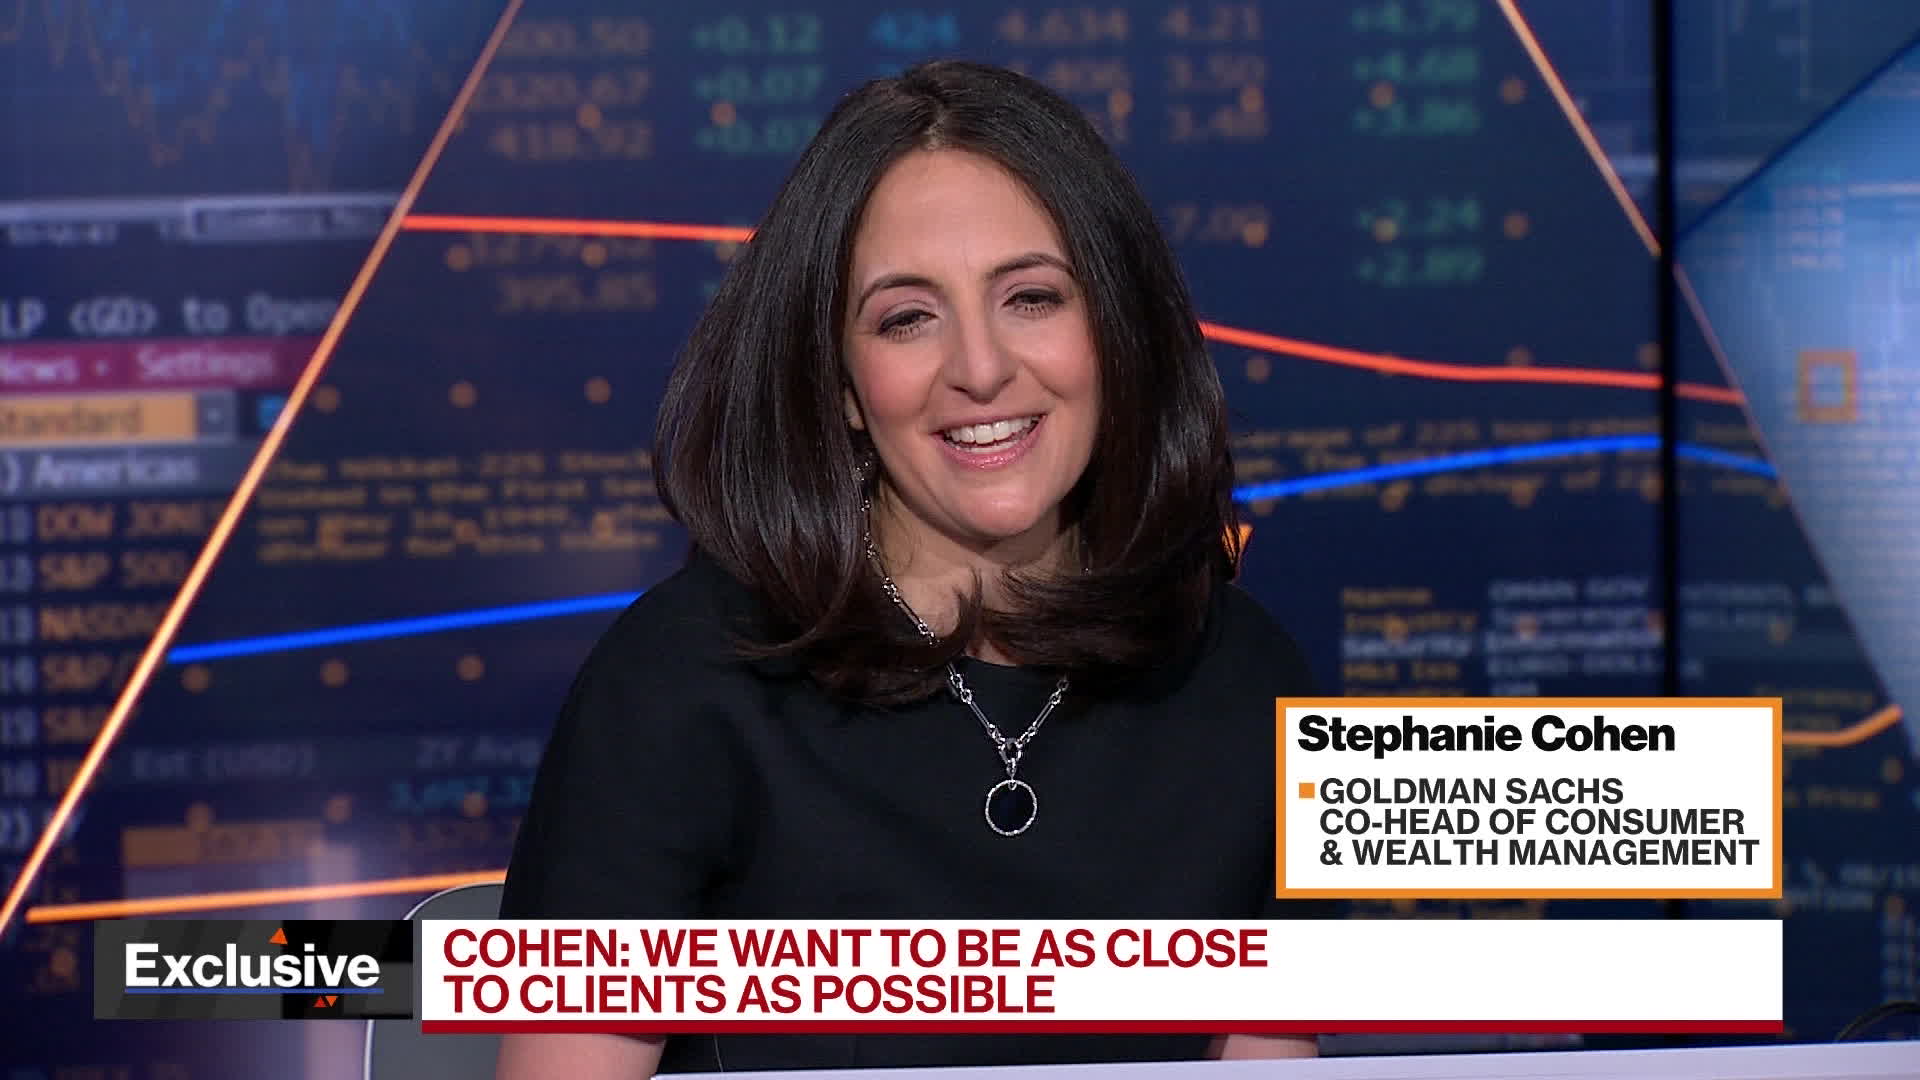 Goldman Sachs fintech executive Stephanie Cohen to take leave of